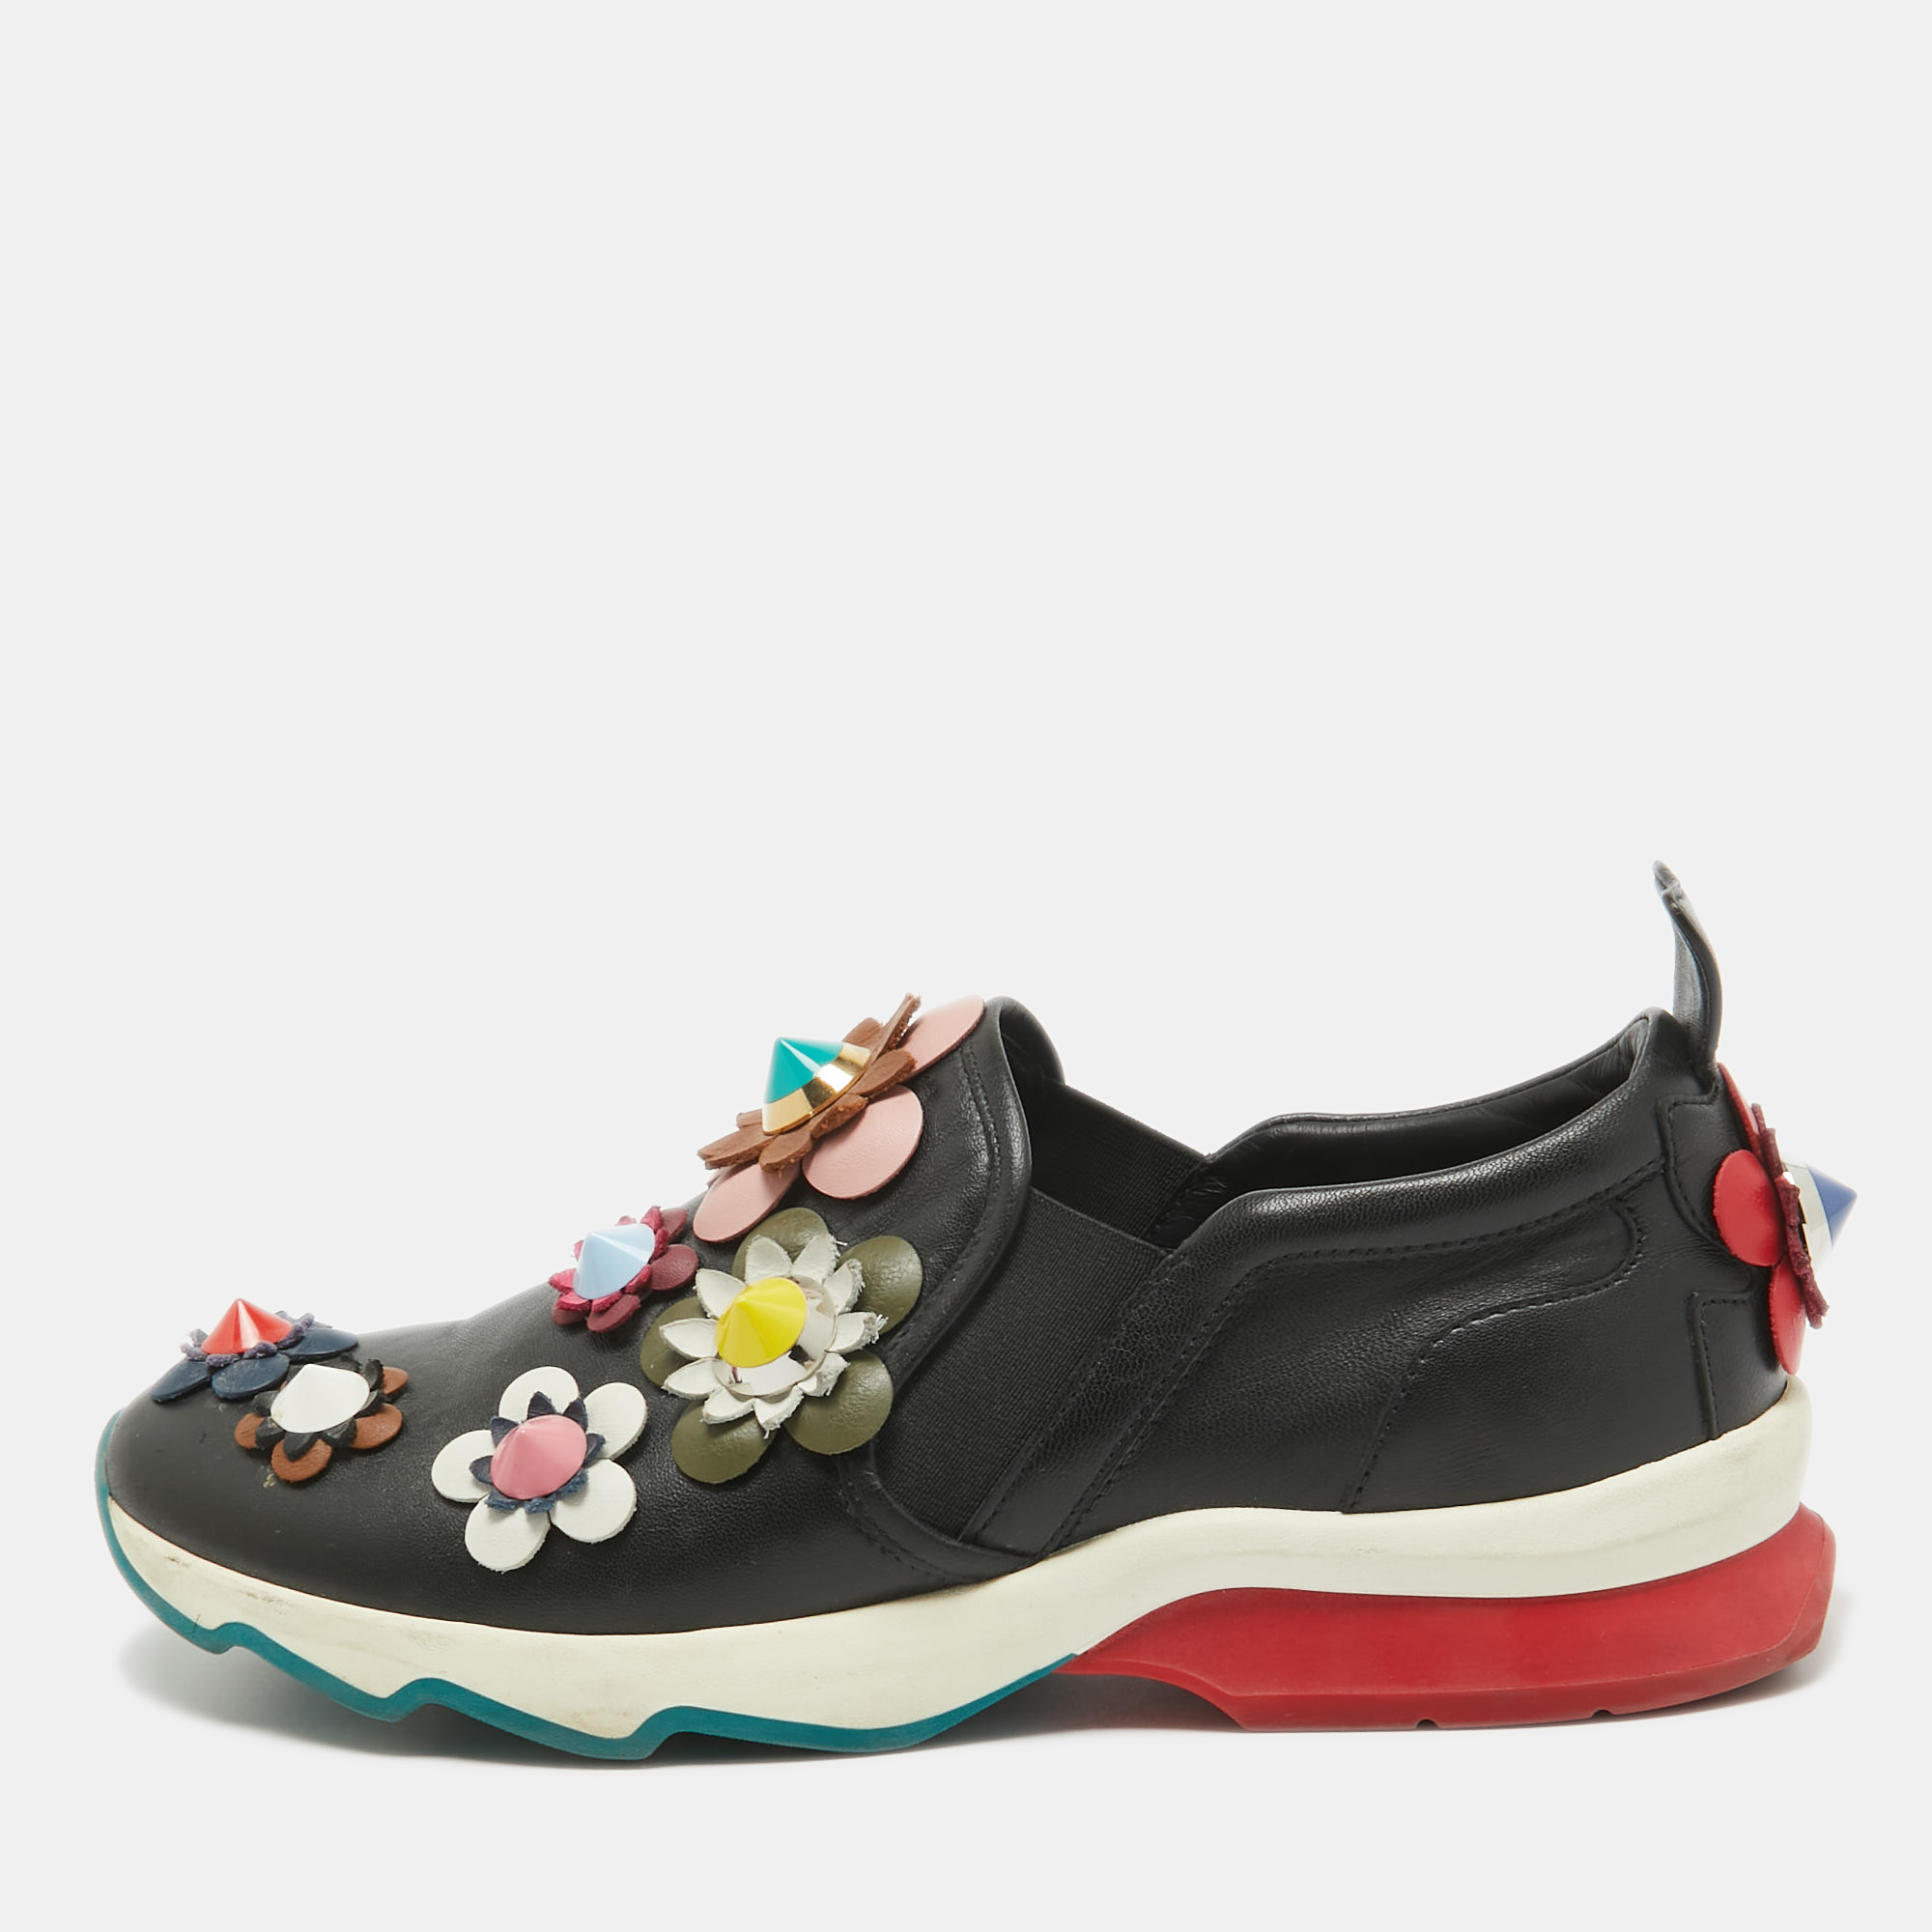 Fendi black leather flowerland slip on sneakers size 38